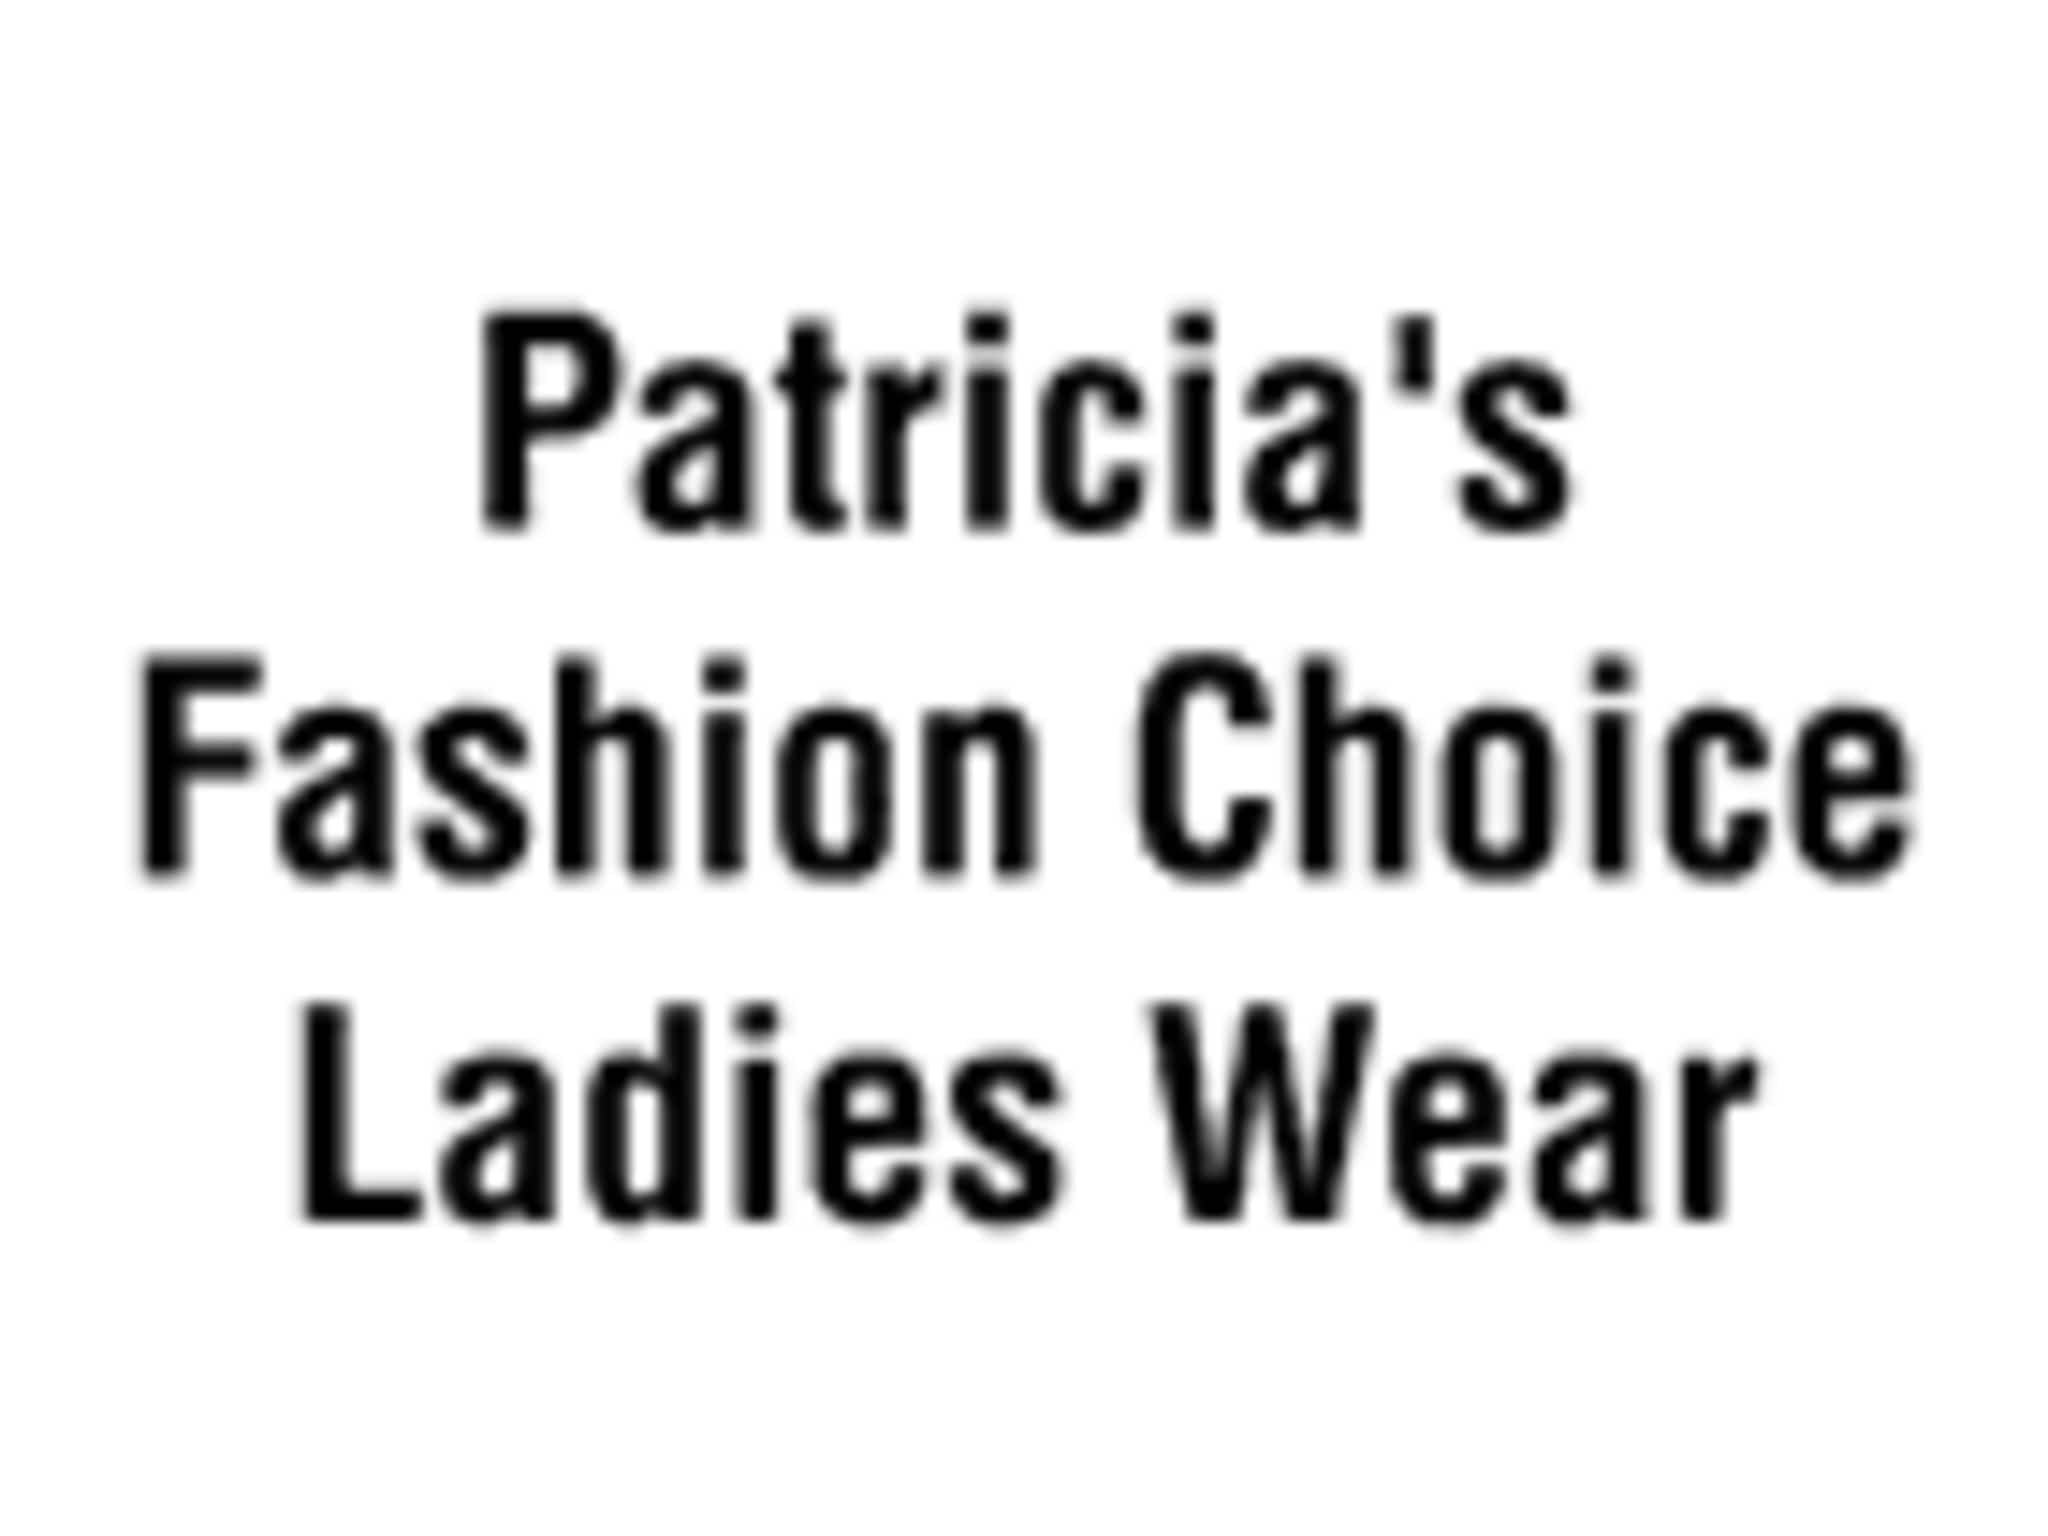 photo Patricia's Fashion Choice Ladies Wear